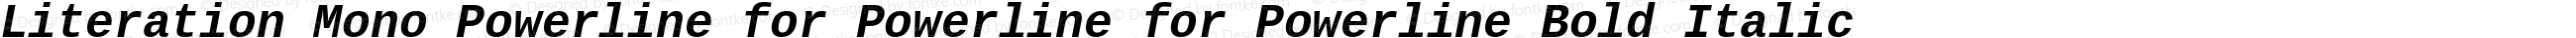 Literation Mono Powerline Bold Italic for Powerline for Powerline